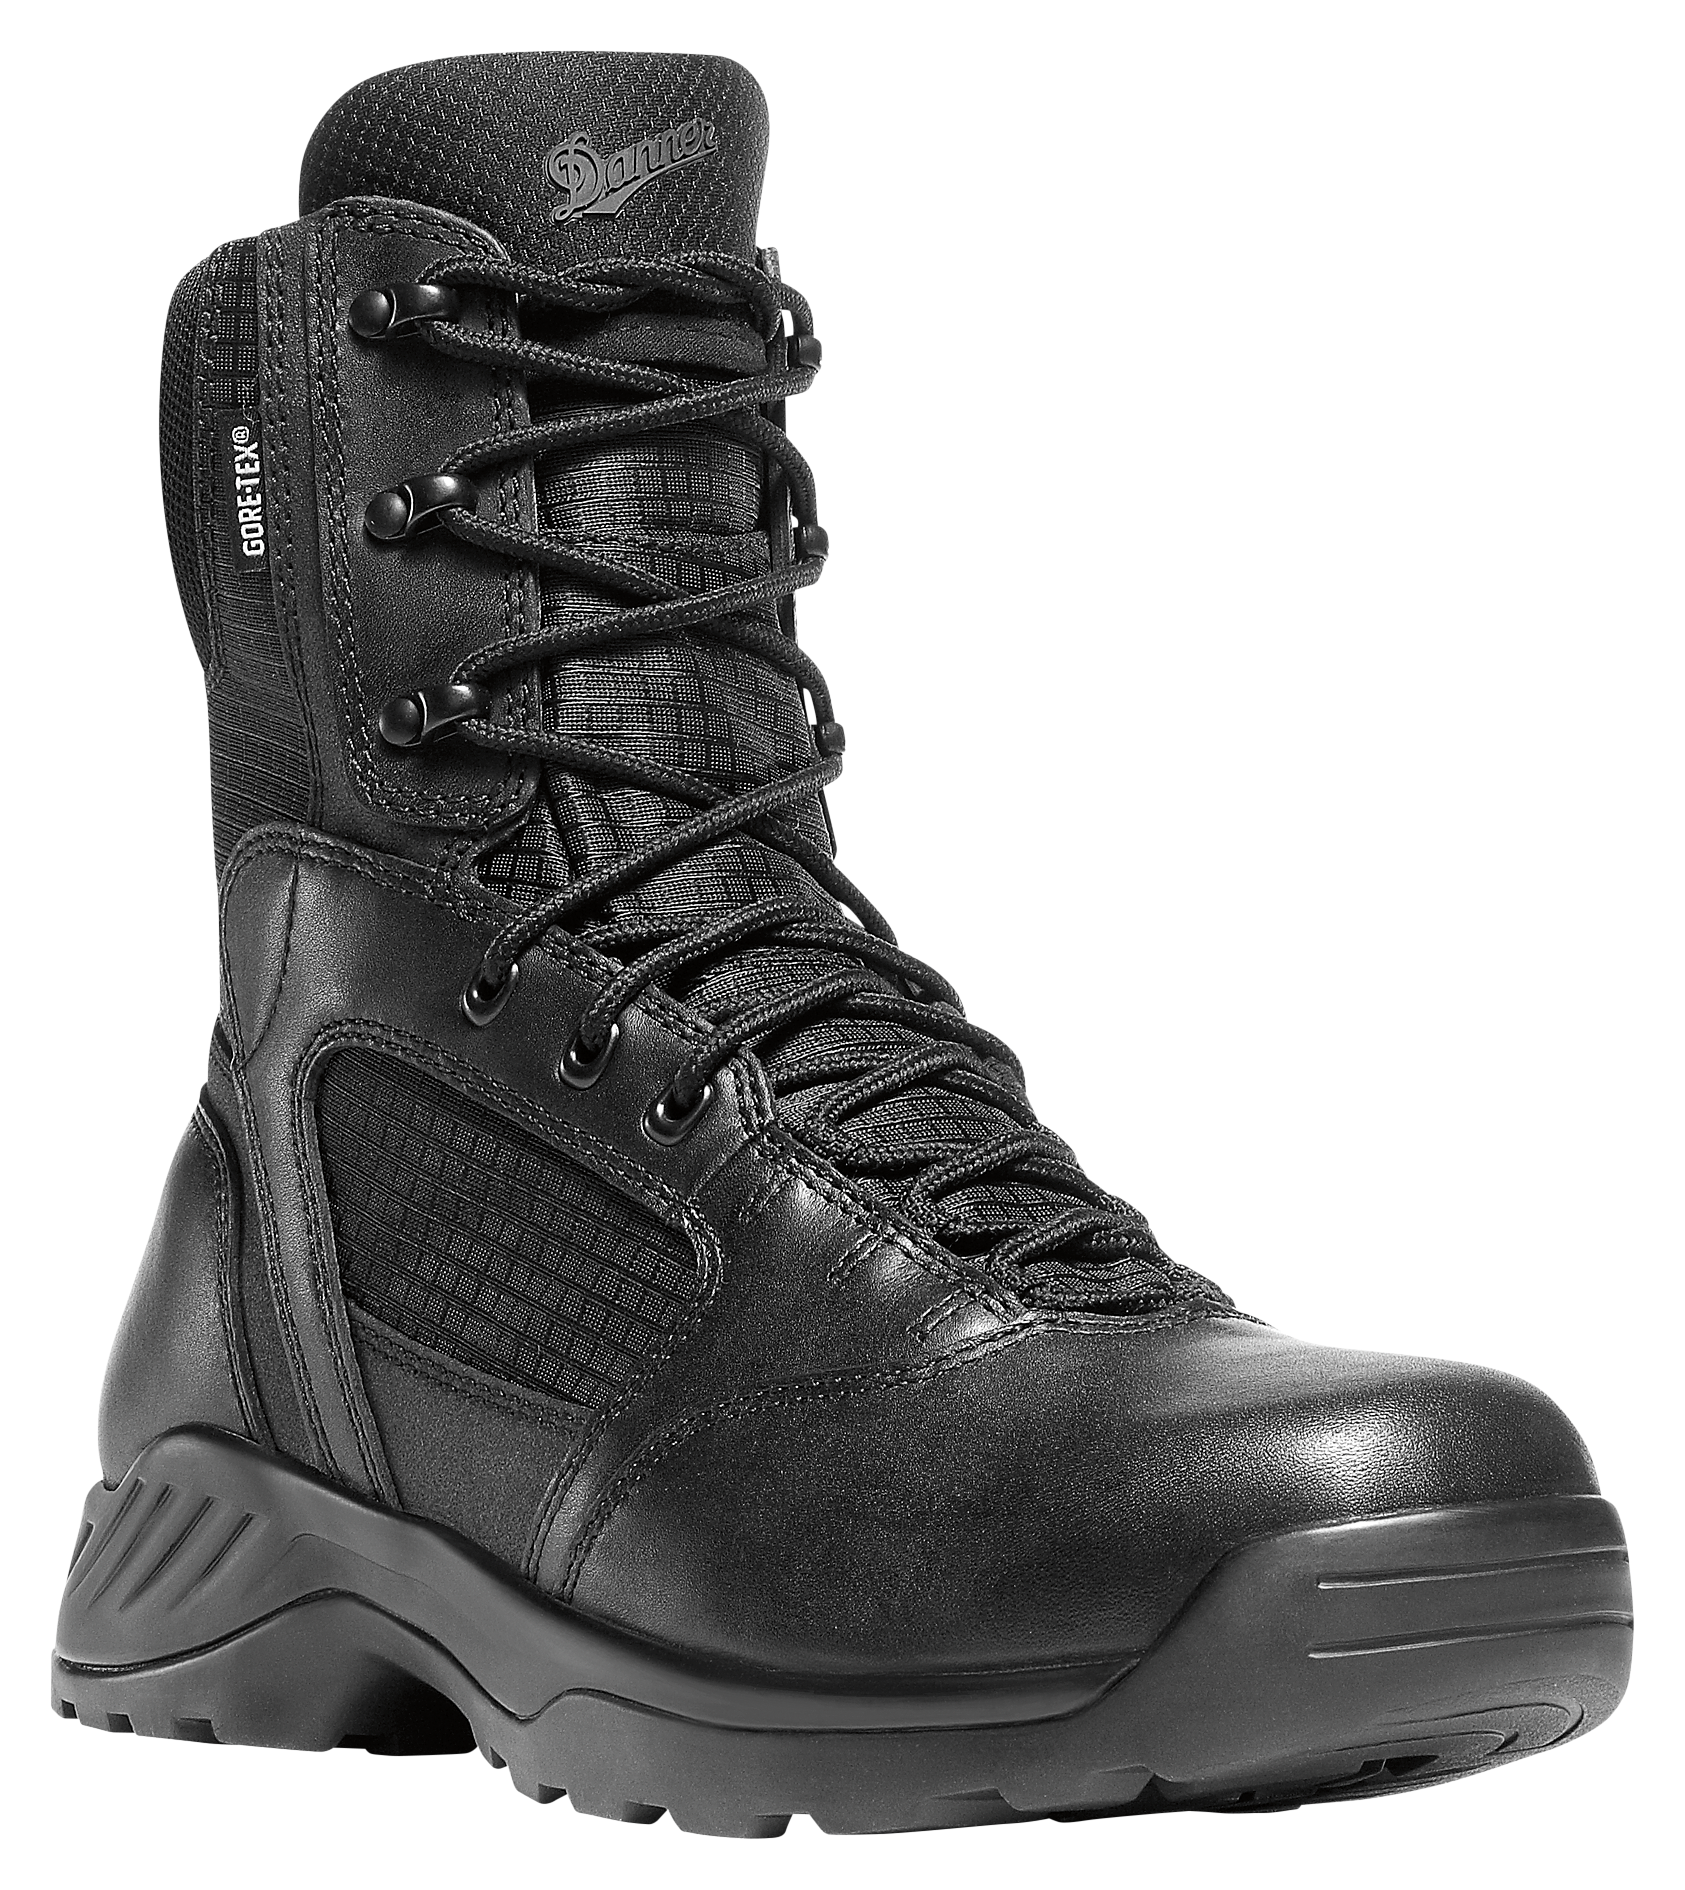 Danner Kinetic GTX Side-Zip Waterproof Tactical Duty Boots for Men - Black - 12M